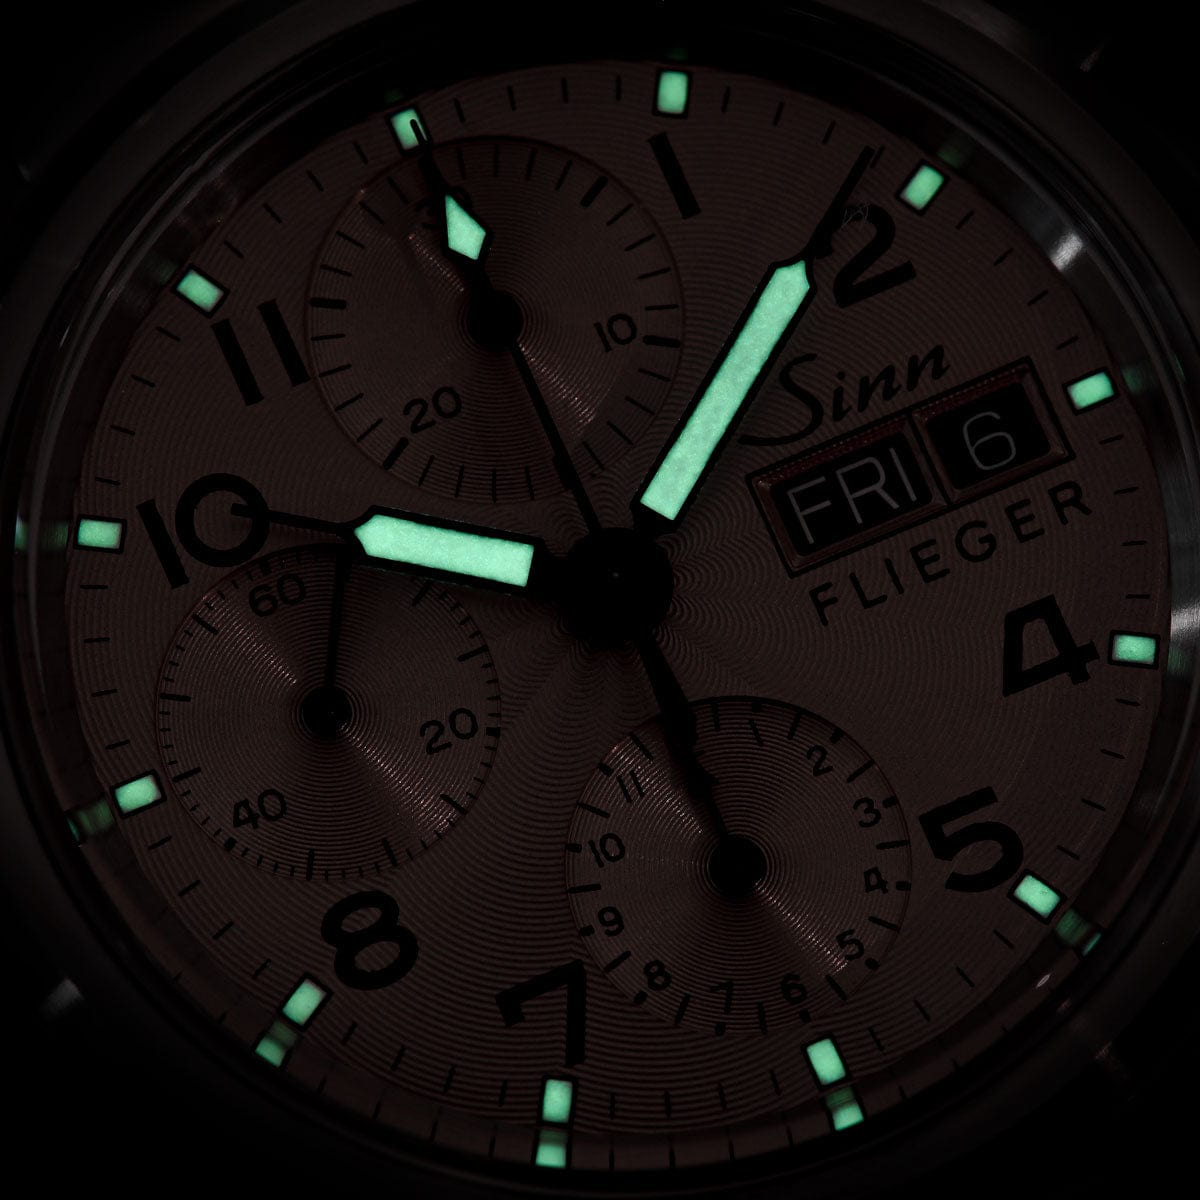 Sinn 356 Sa Pilot III Automatic Chronograph Watch - Silver Dial - Solid Bracelet